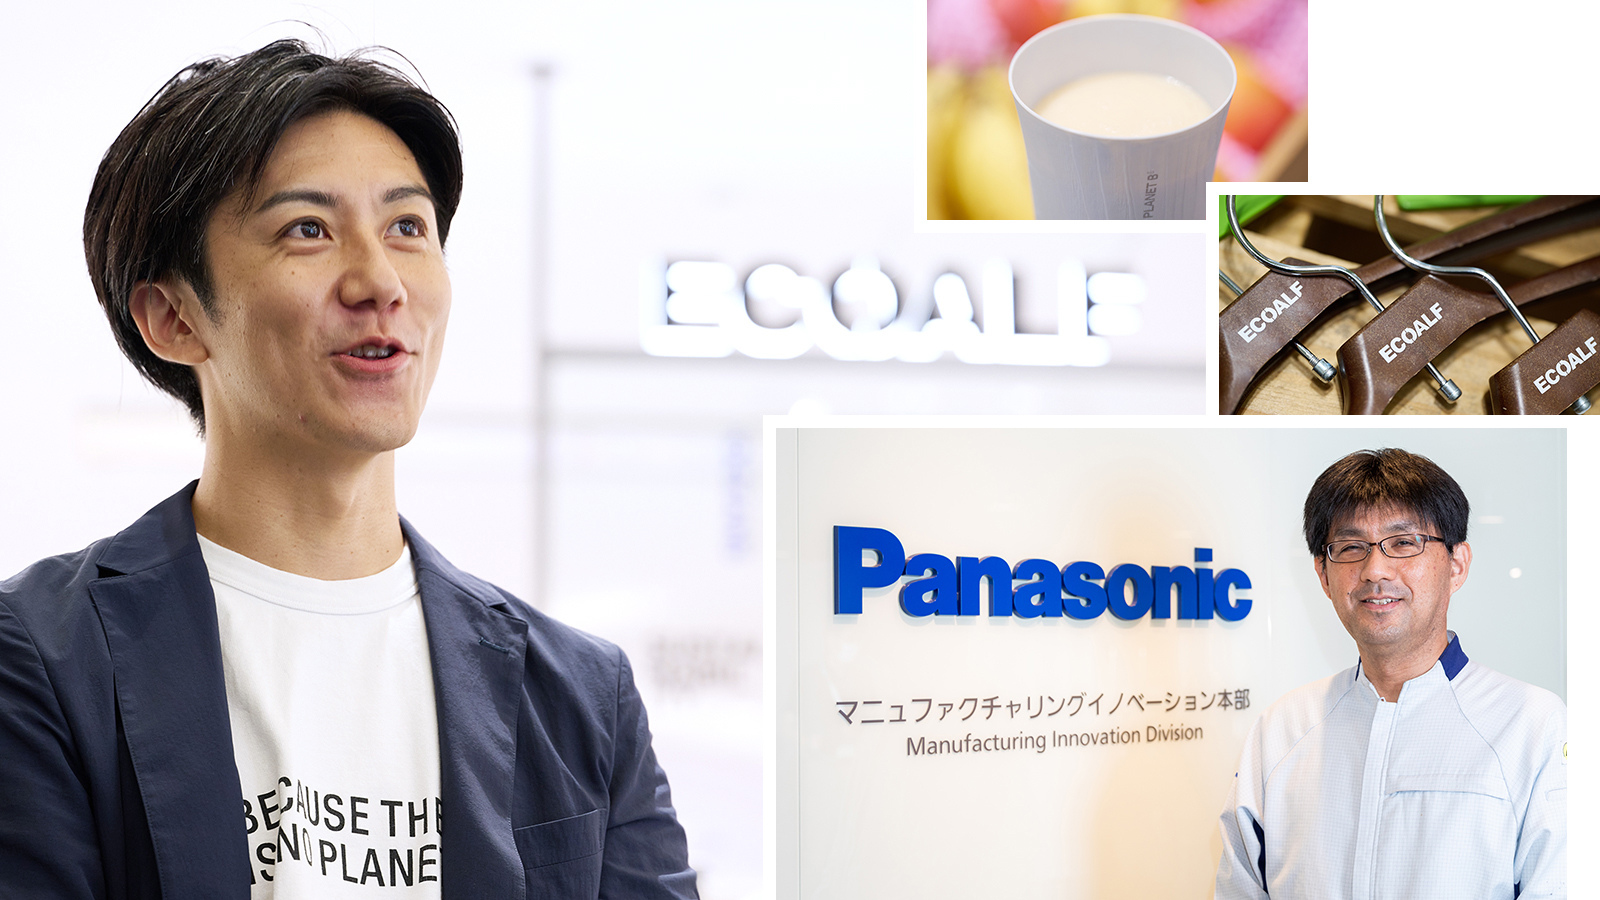 Image: Panasonic and ECOALF to Take Up Challenge of Sustainable Fashion